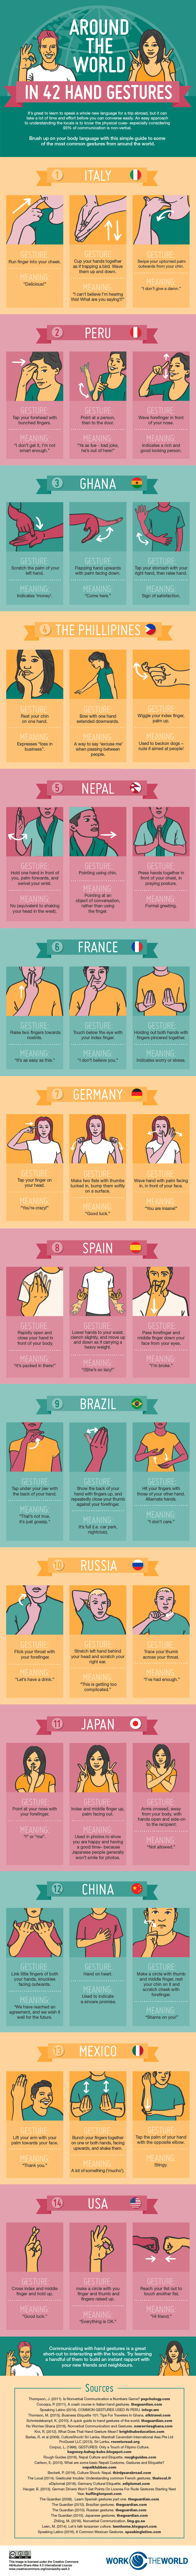 Hand gestures infographic